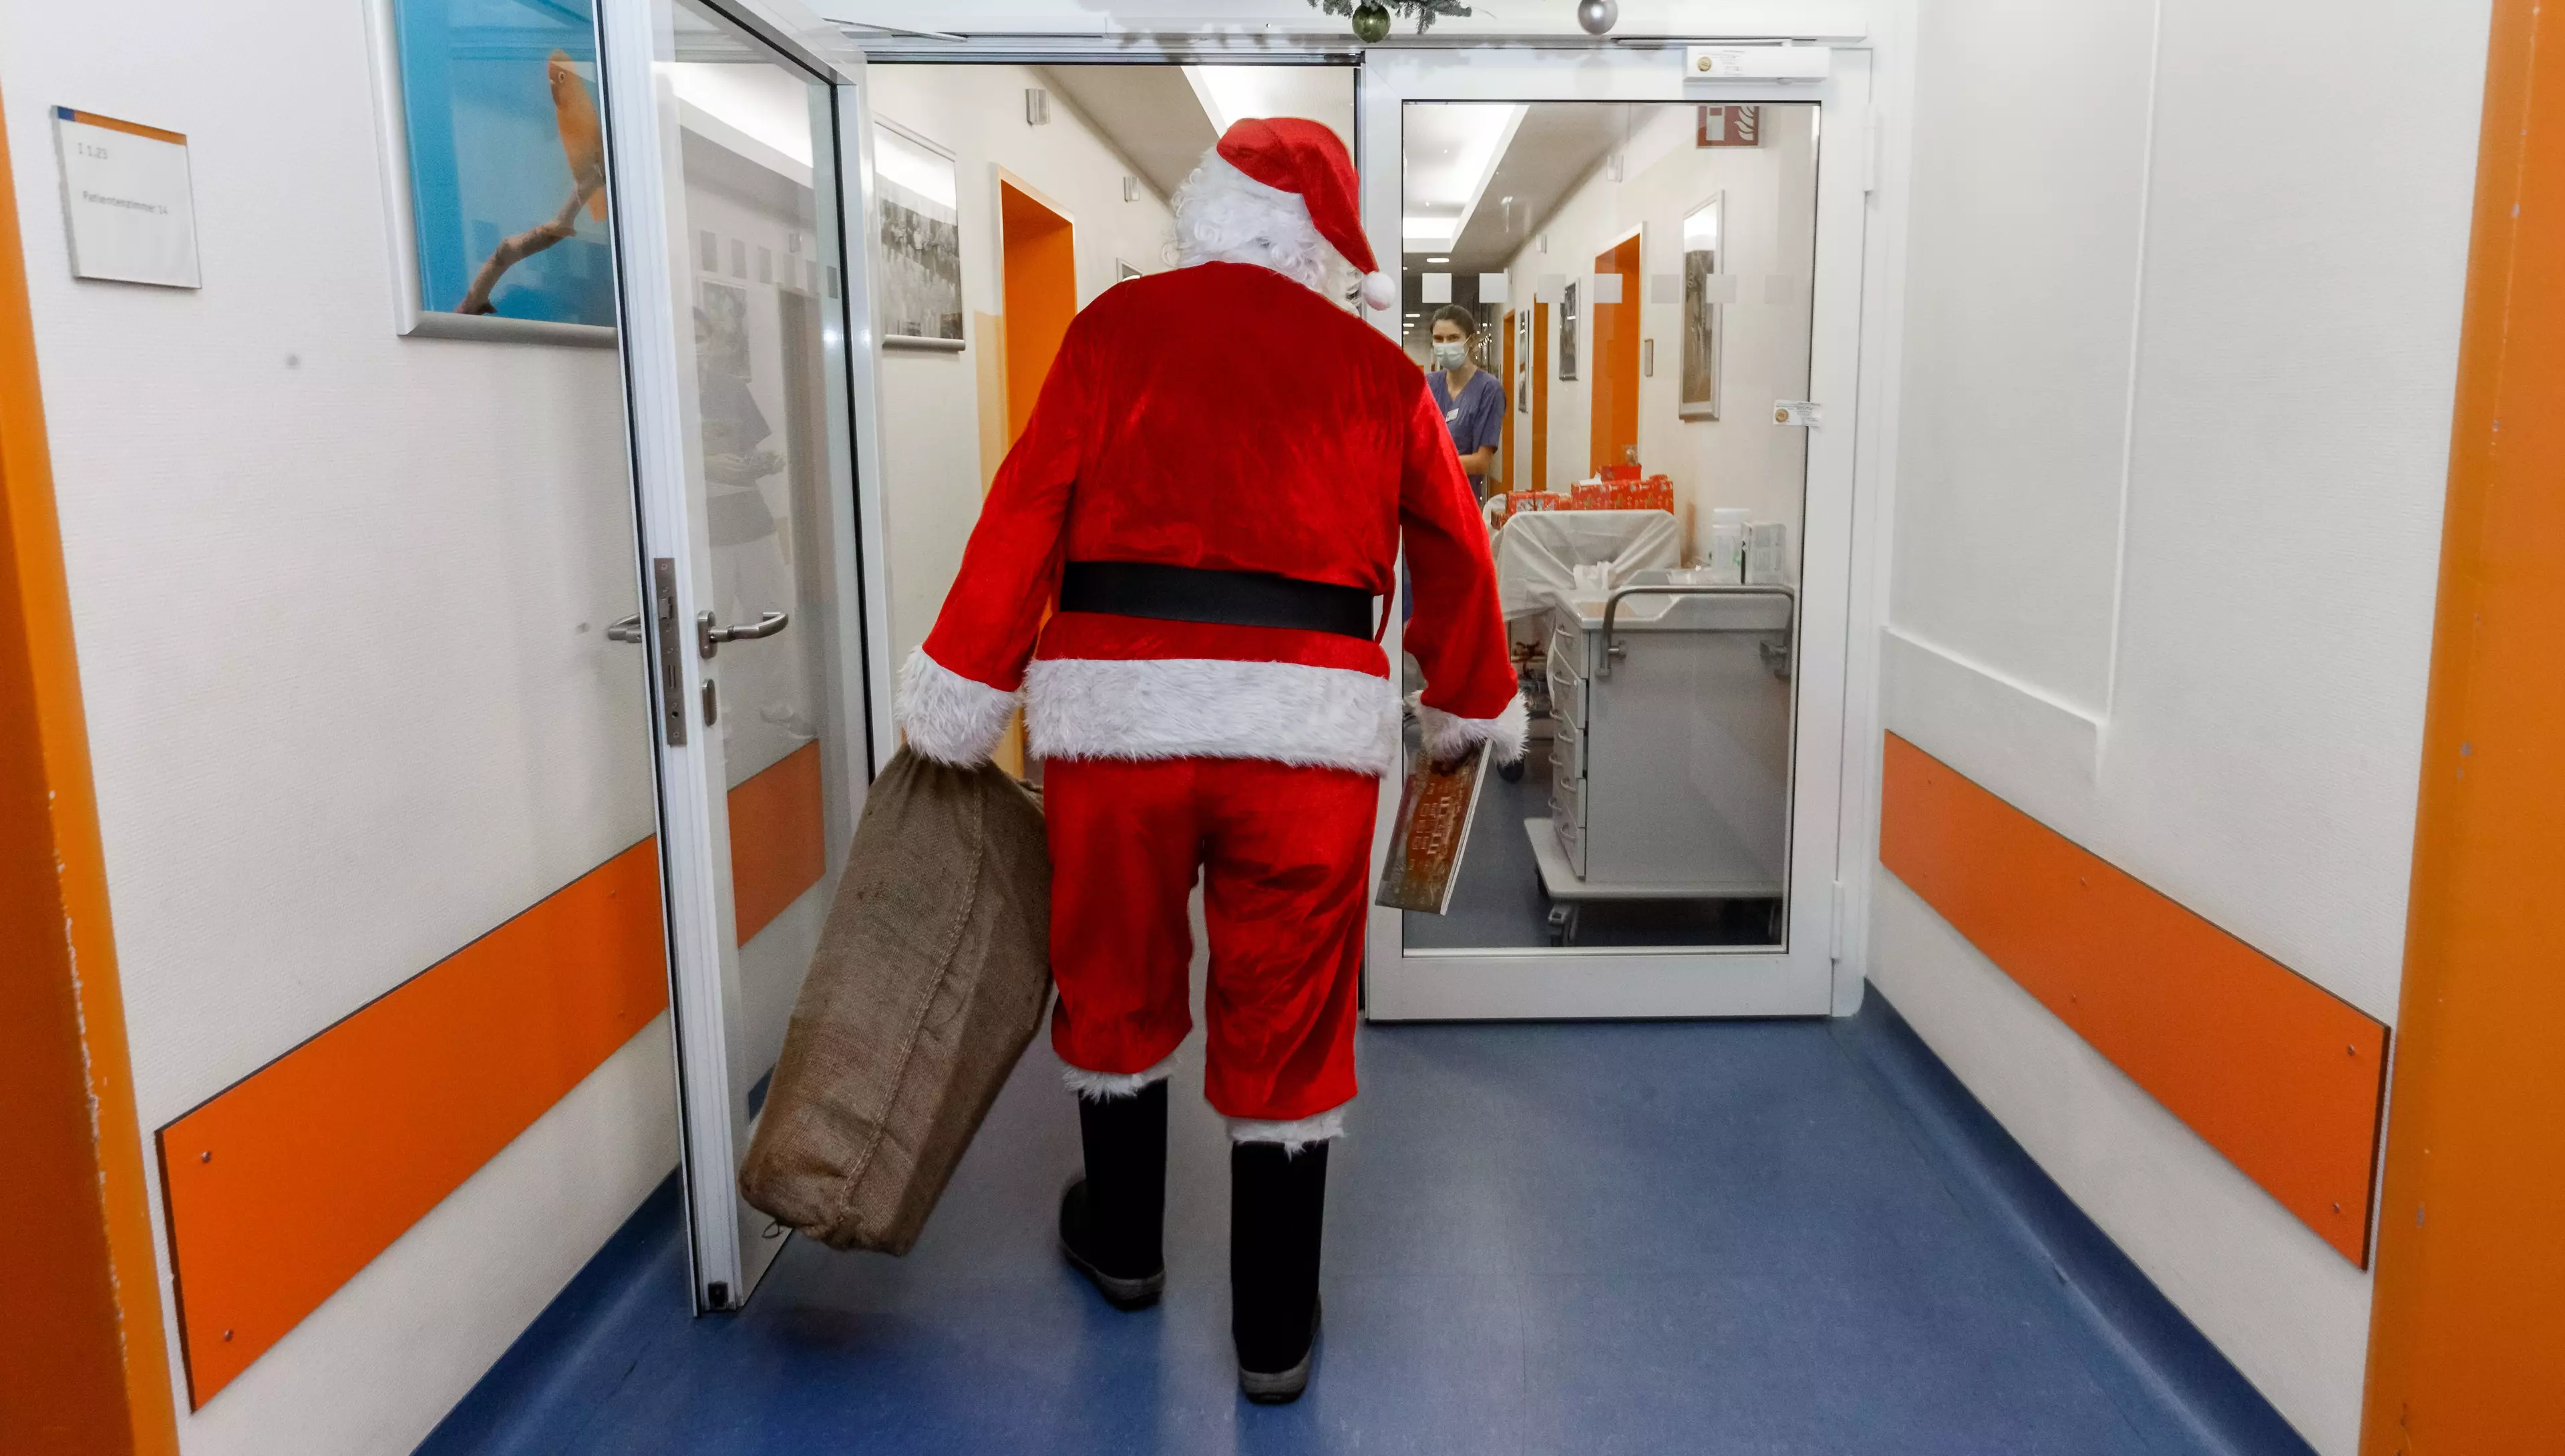 File image of a man dressed as Santa.